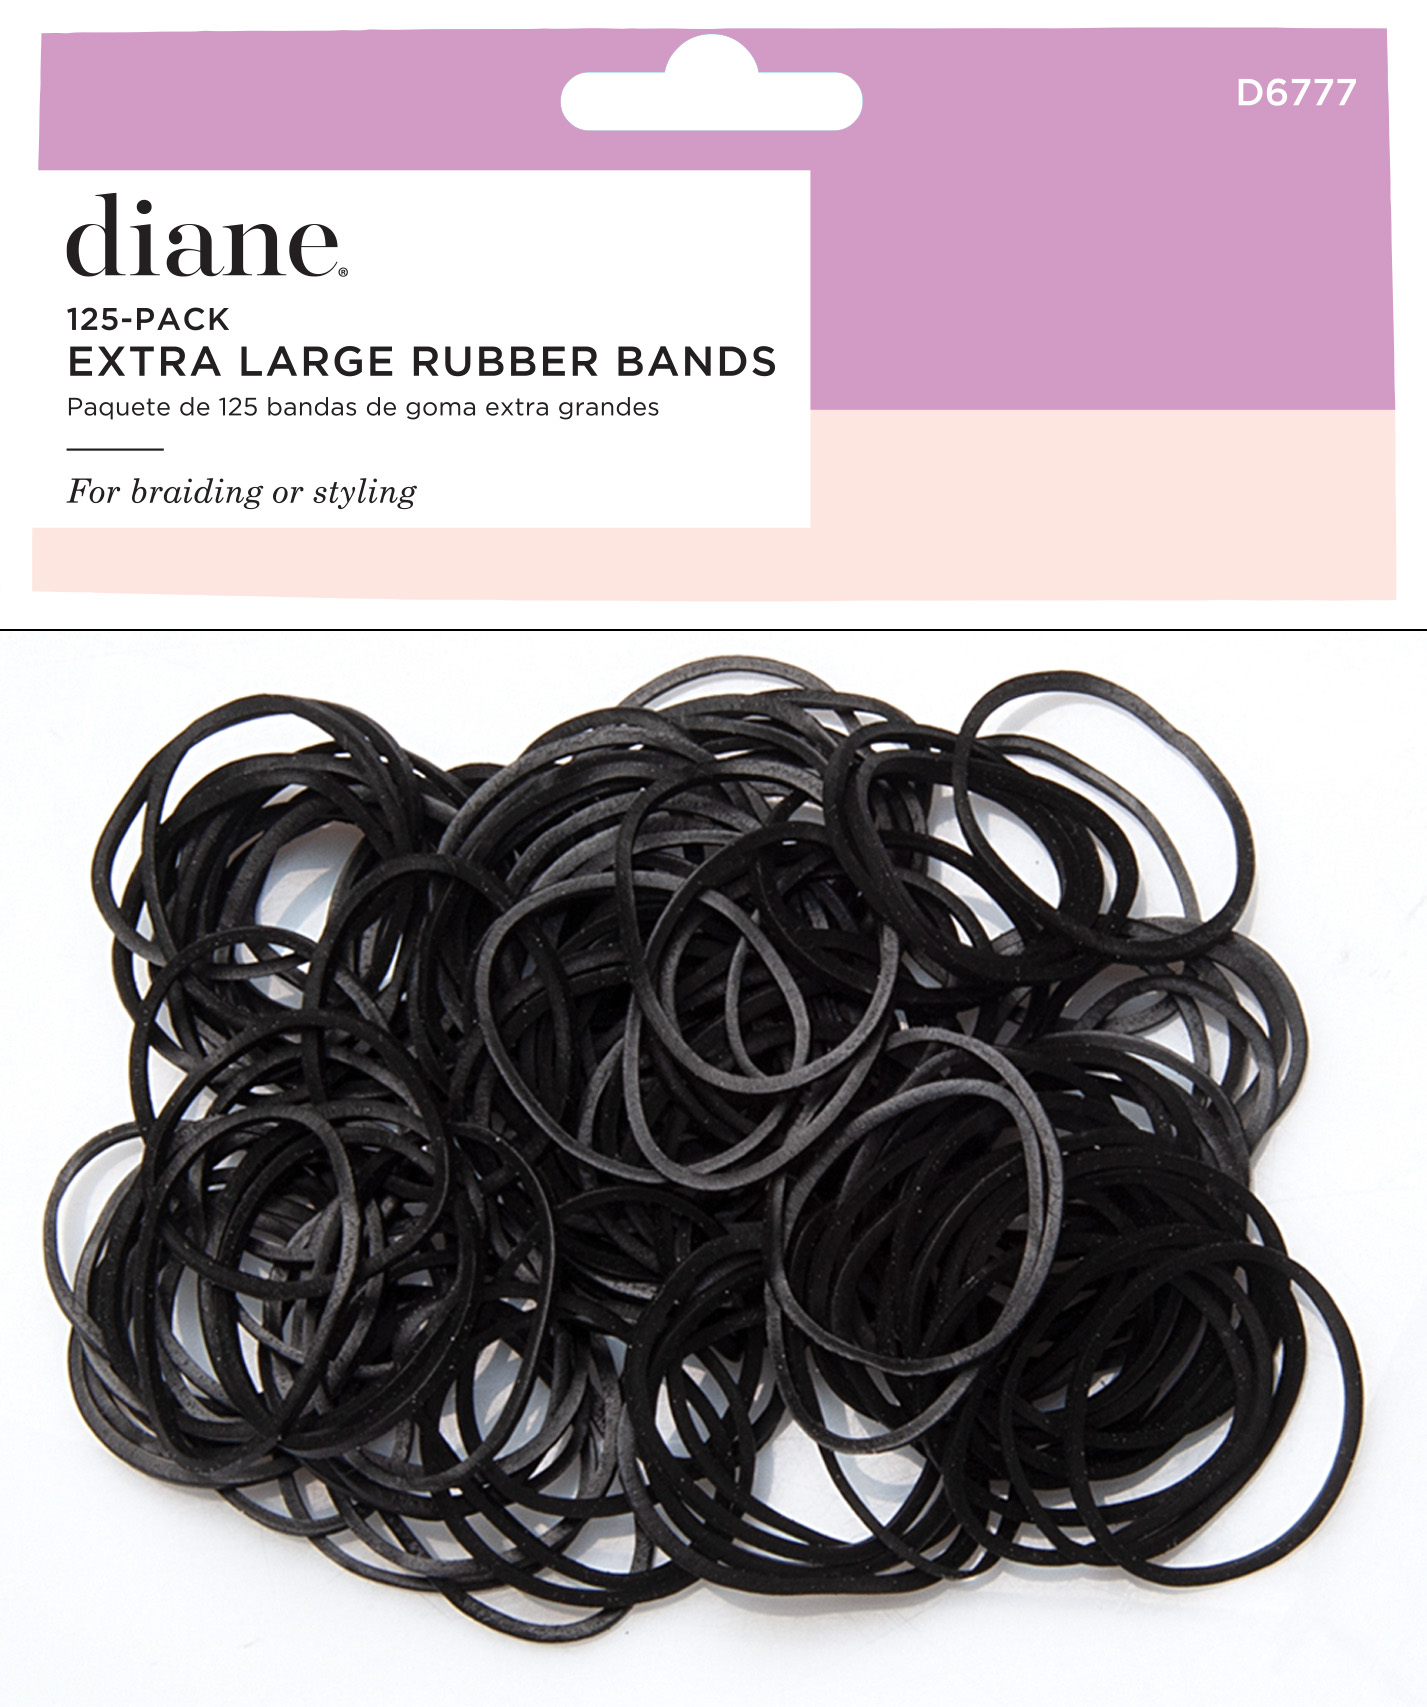 Diane D6777 XL RUBBER BANDS BLK 125PK UPC # 824703027696 - Click Image to Close